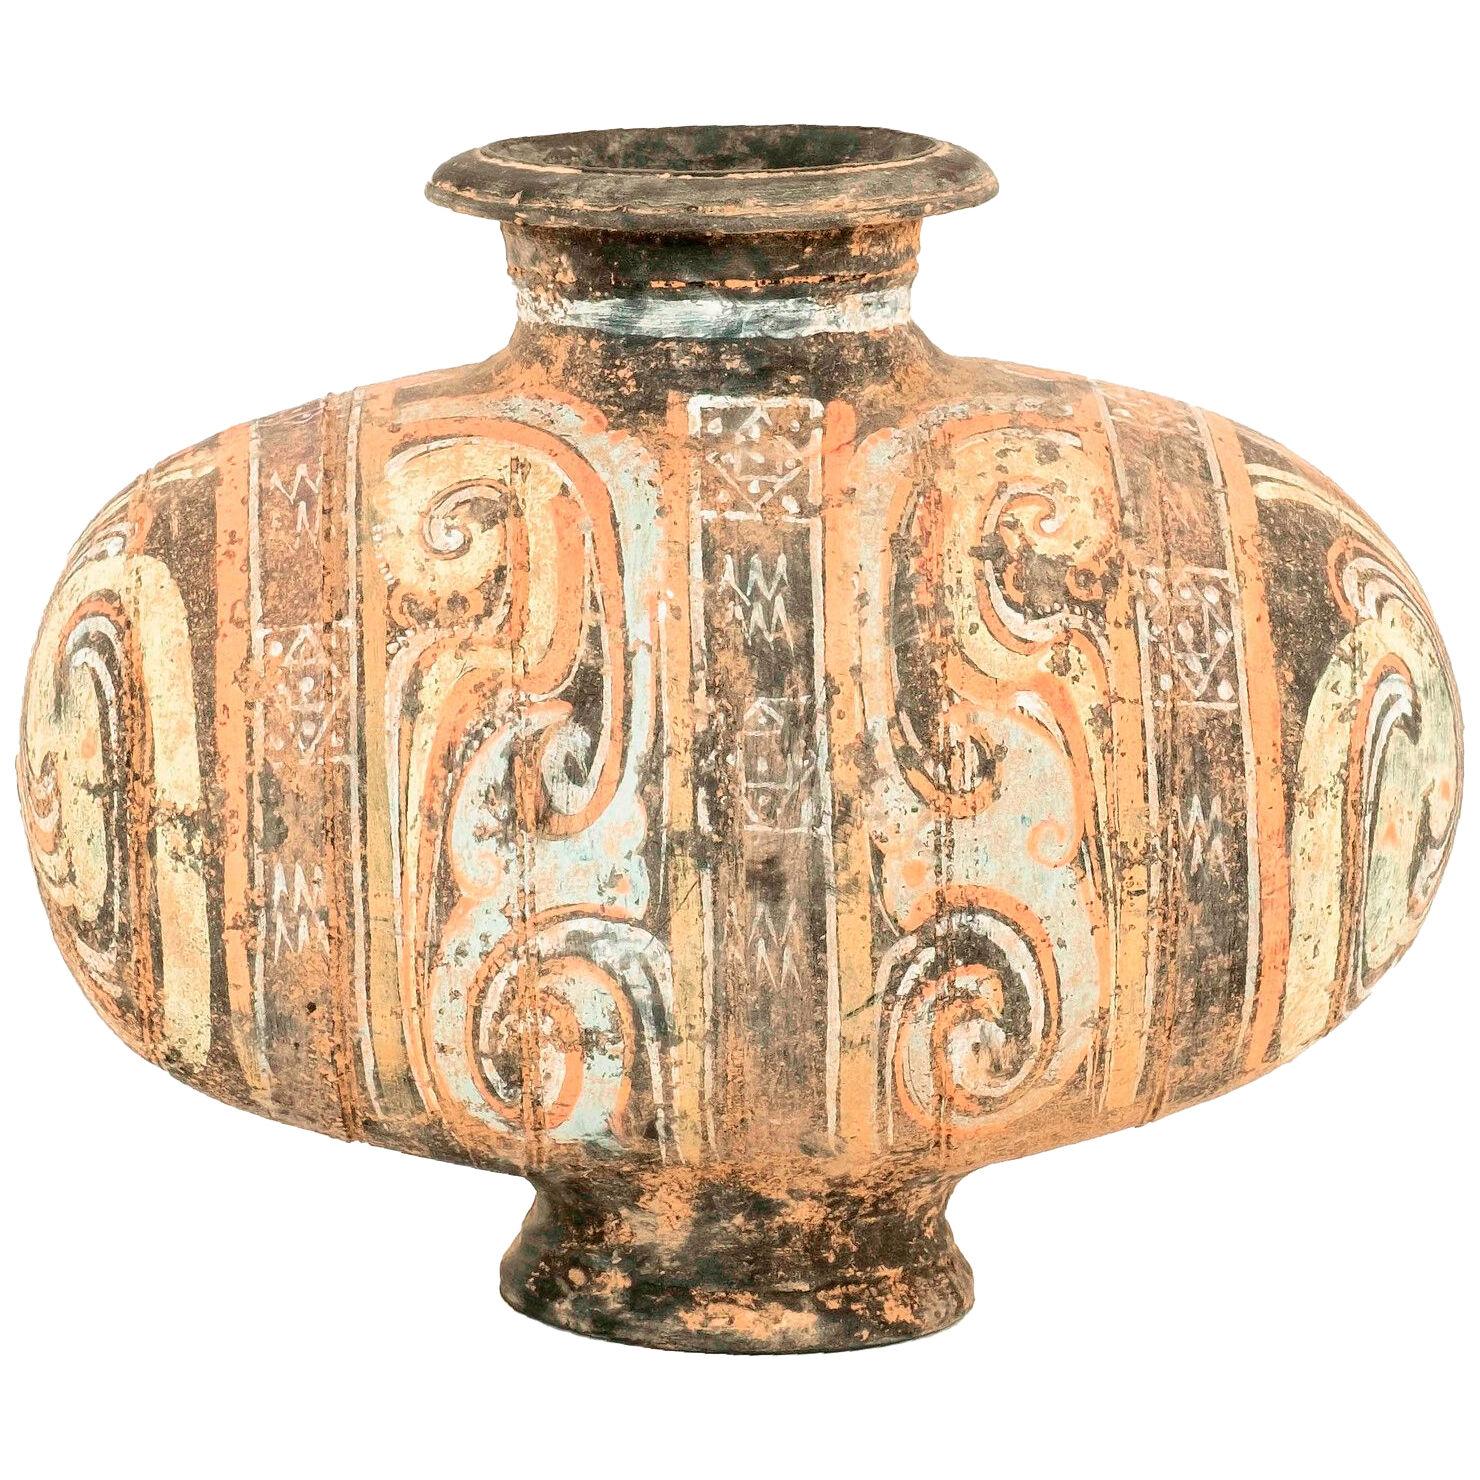 Han Dynasty Earthware Cocoon Jar Circa 206 BC-220 AD